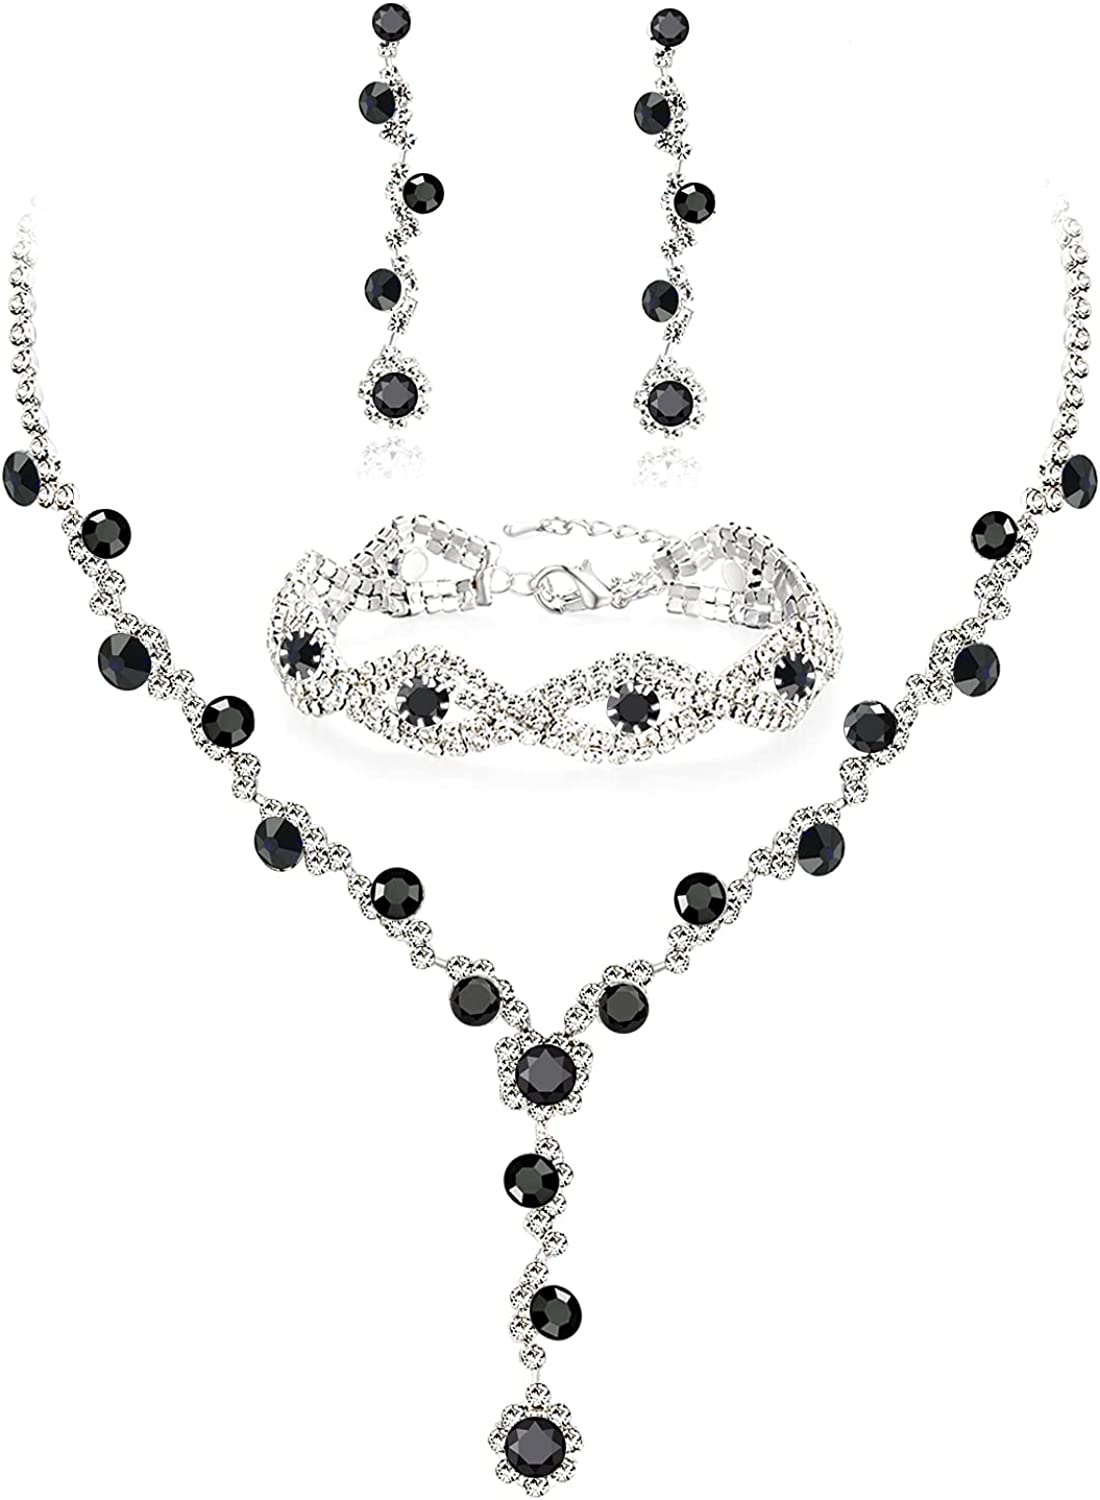 Floral Cluster Crystal Black Rhinestone Bridal Jewelry Sets